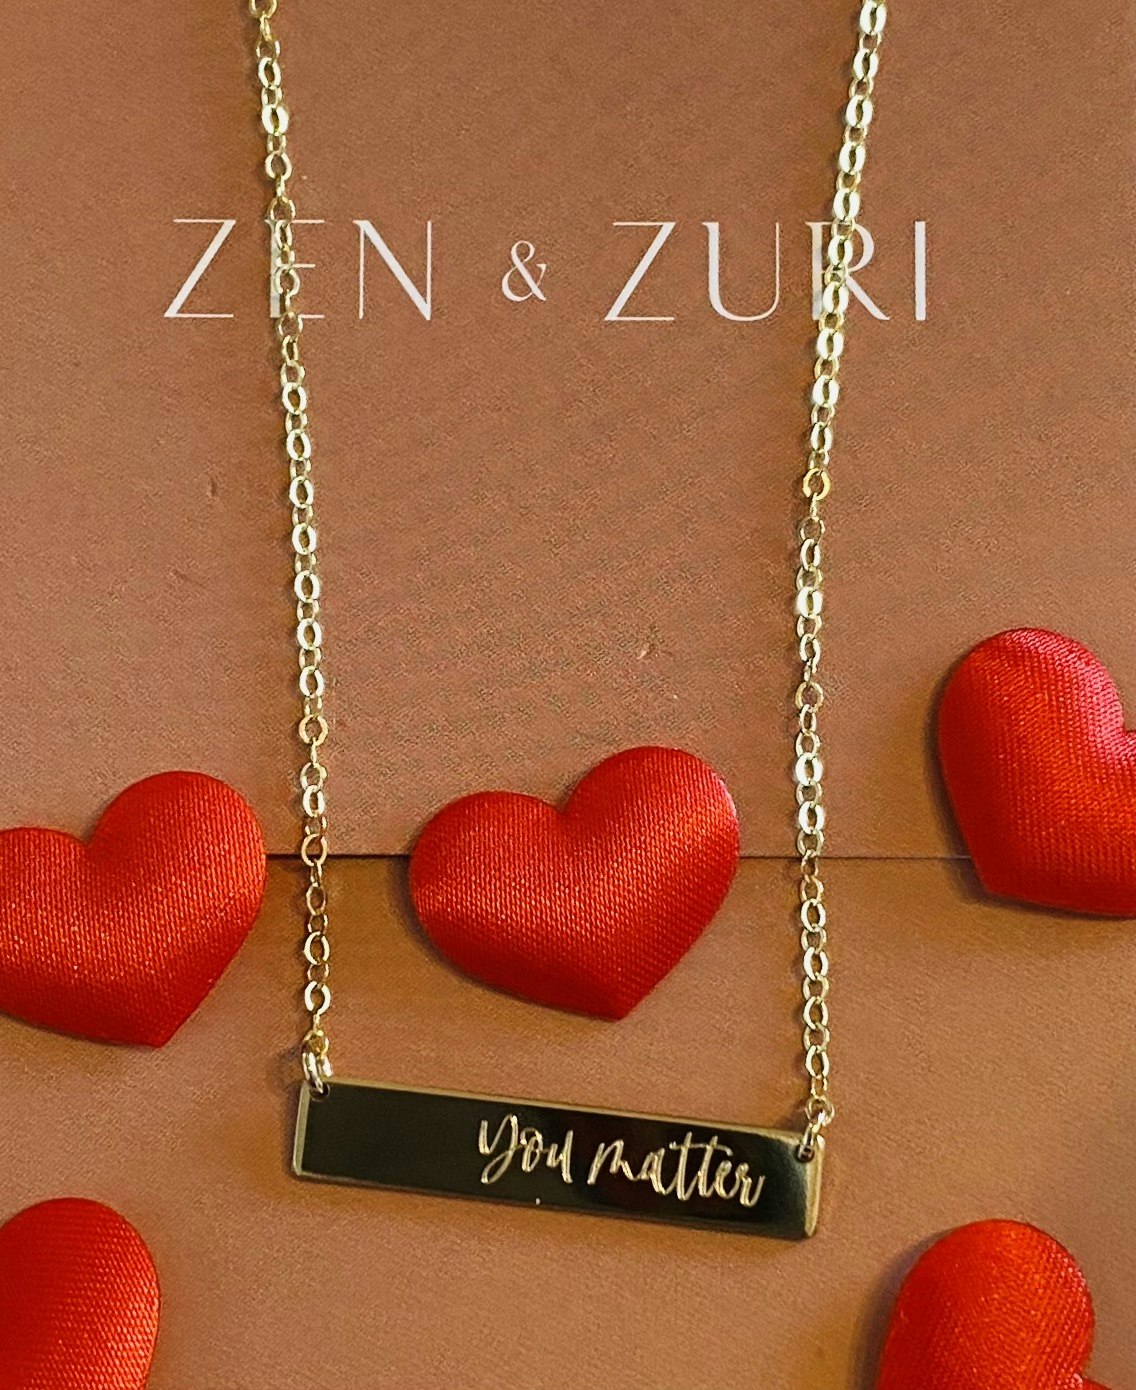 Zen & Zuri Gullkjede - "You Matter"